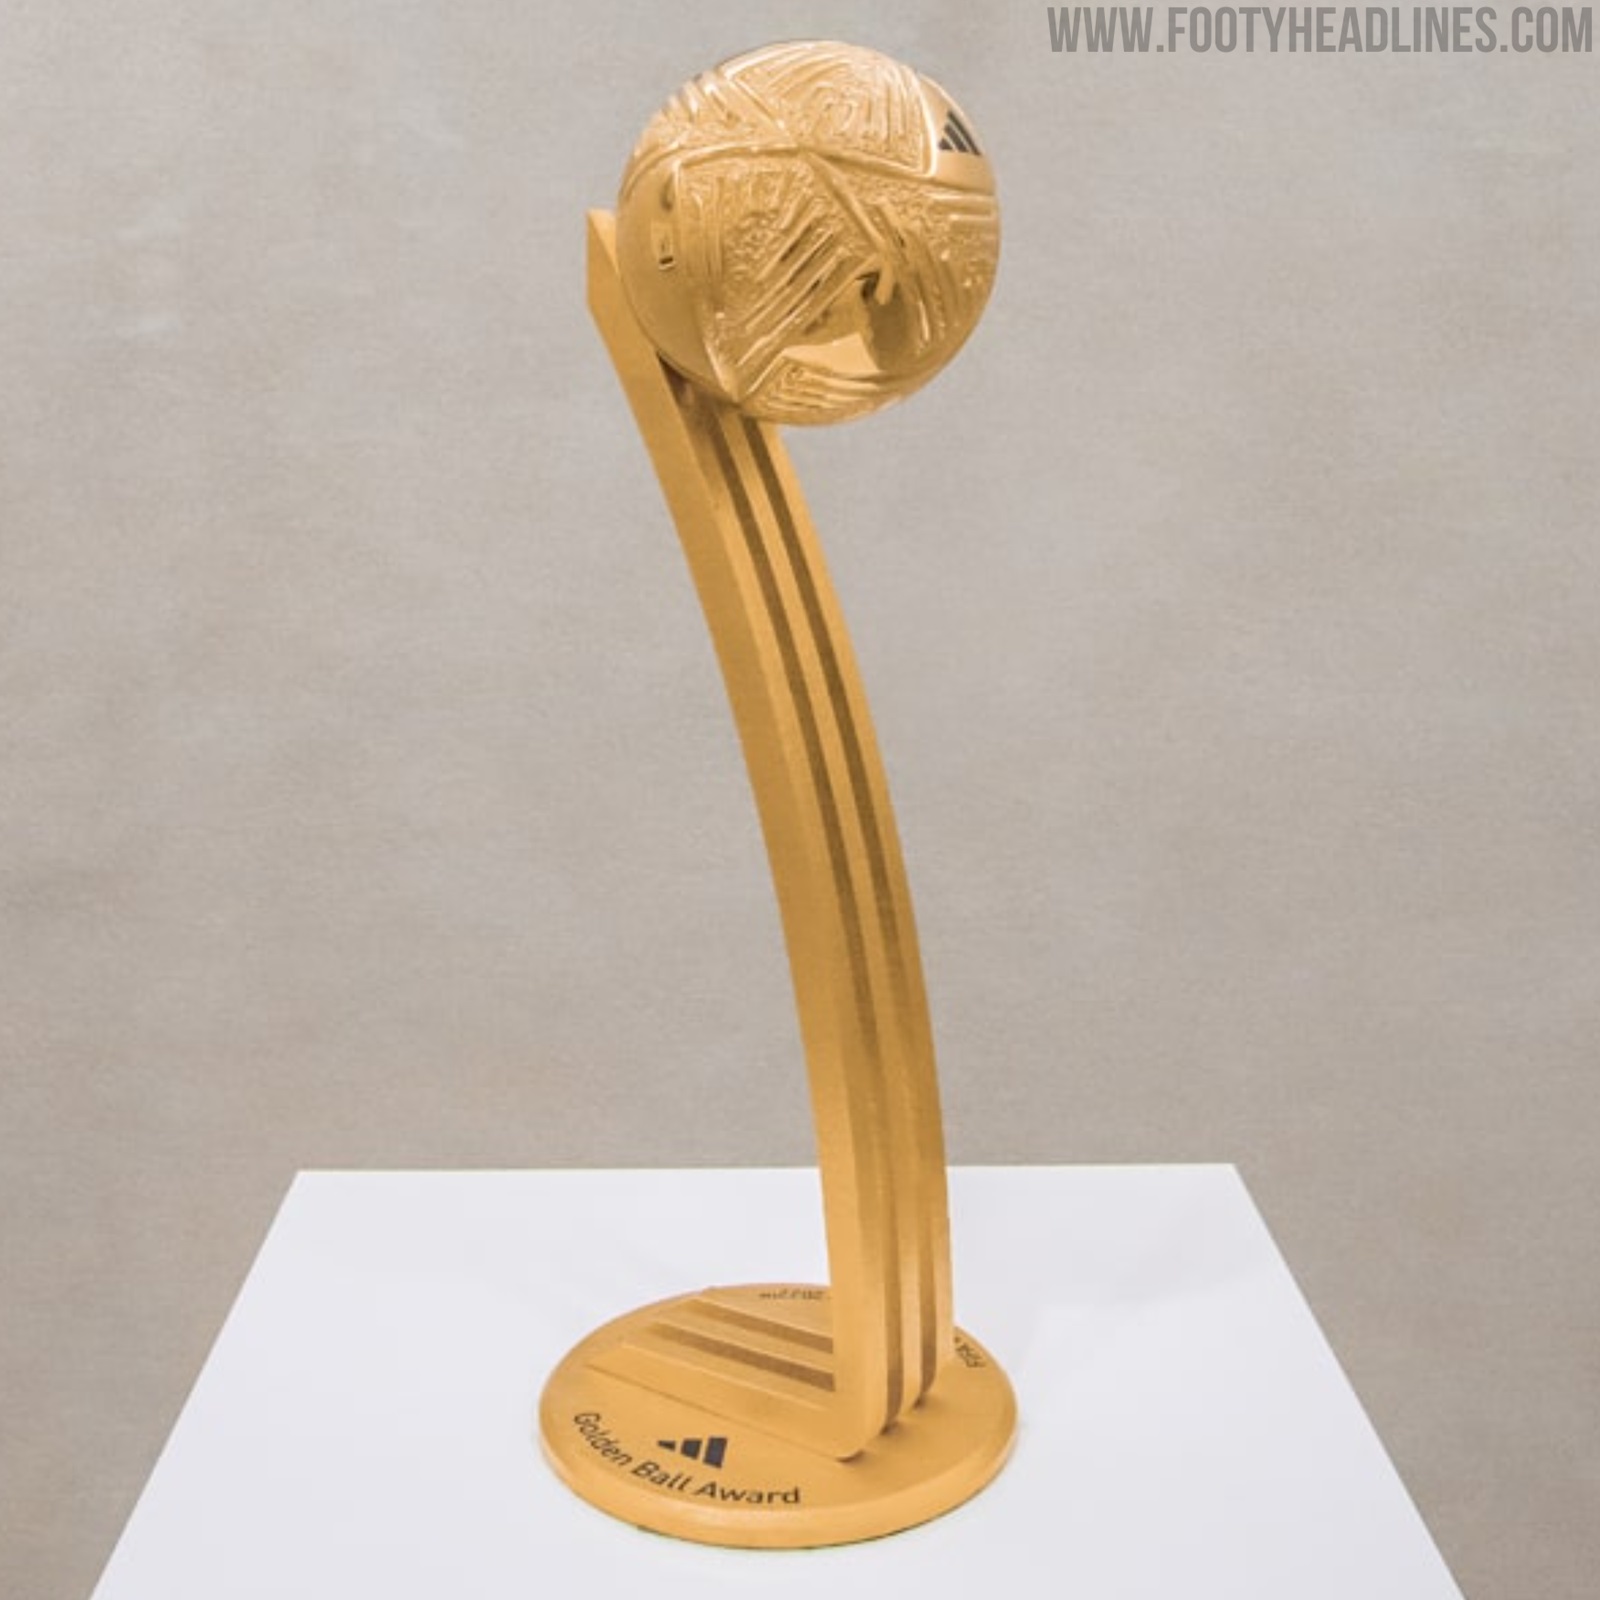 Zus kleur Torrent Mbappe x Adidas | Adidas 2022 World Cup Golden Ball, Golden Boot & Golden  Glove Trophies Awarded - Footy Headlines